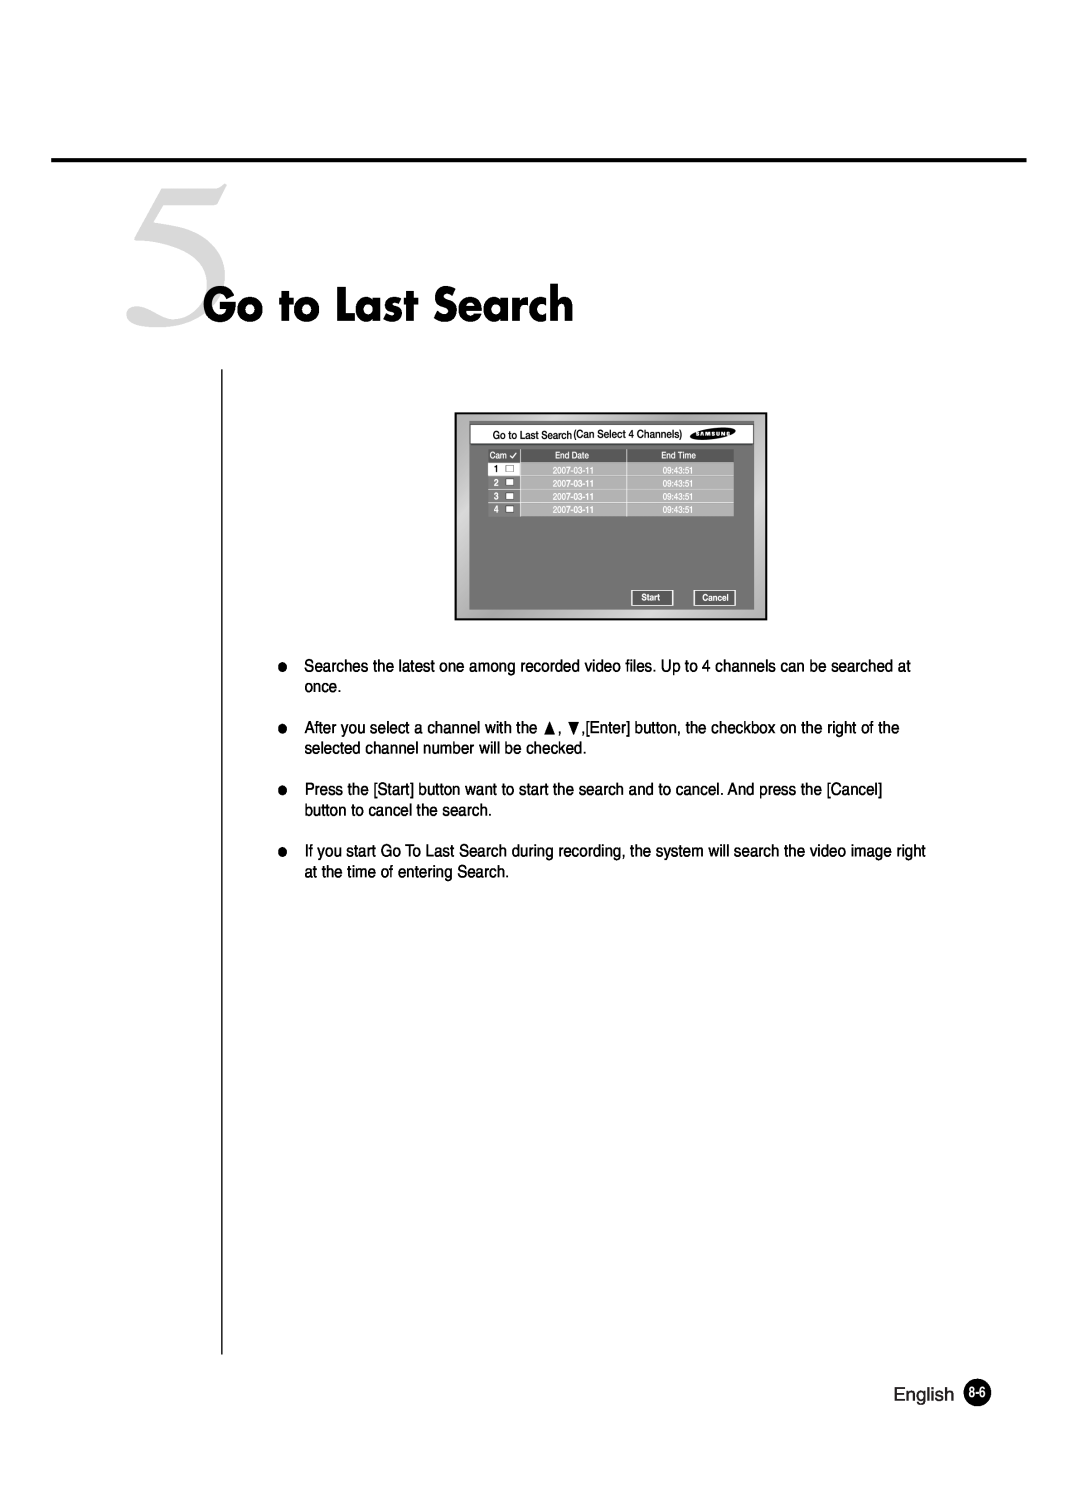 Samsung SHR-2042P250, SHR-2040P250 manual 5Go to Last Search, English 